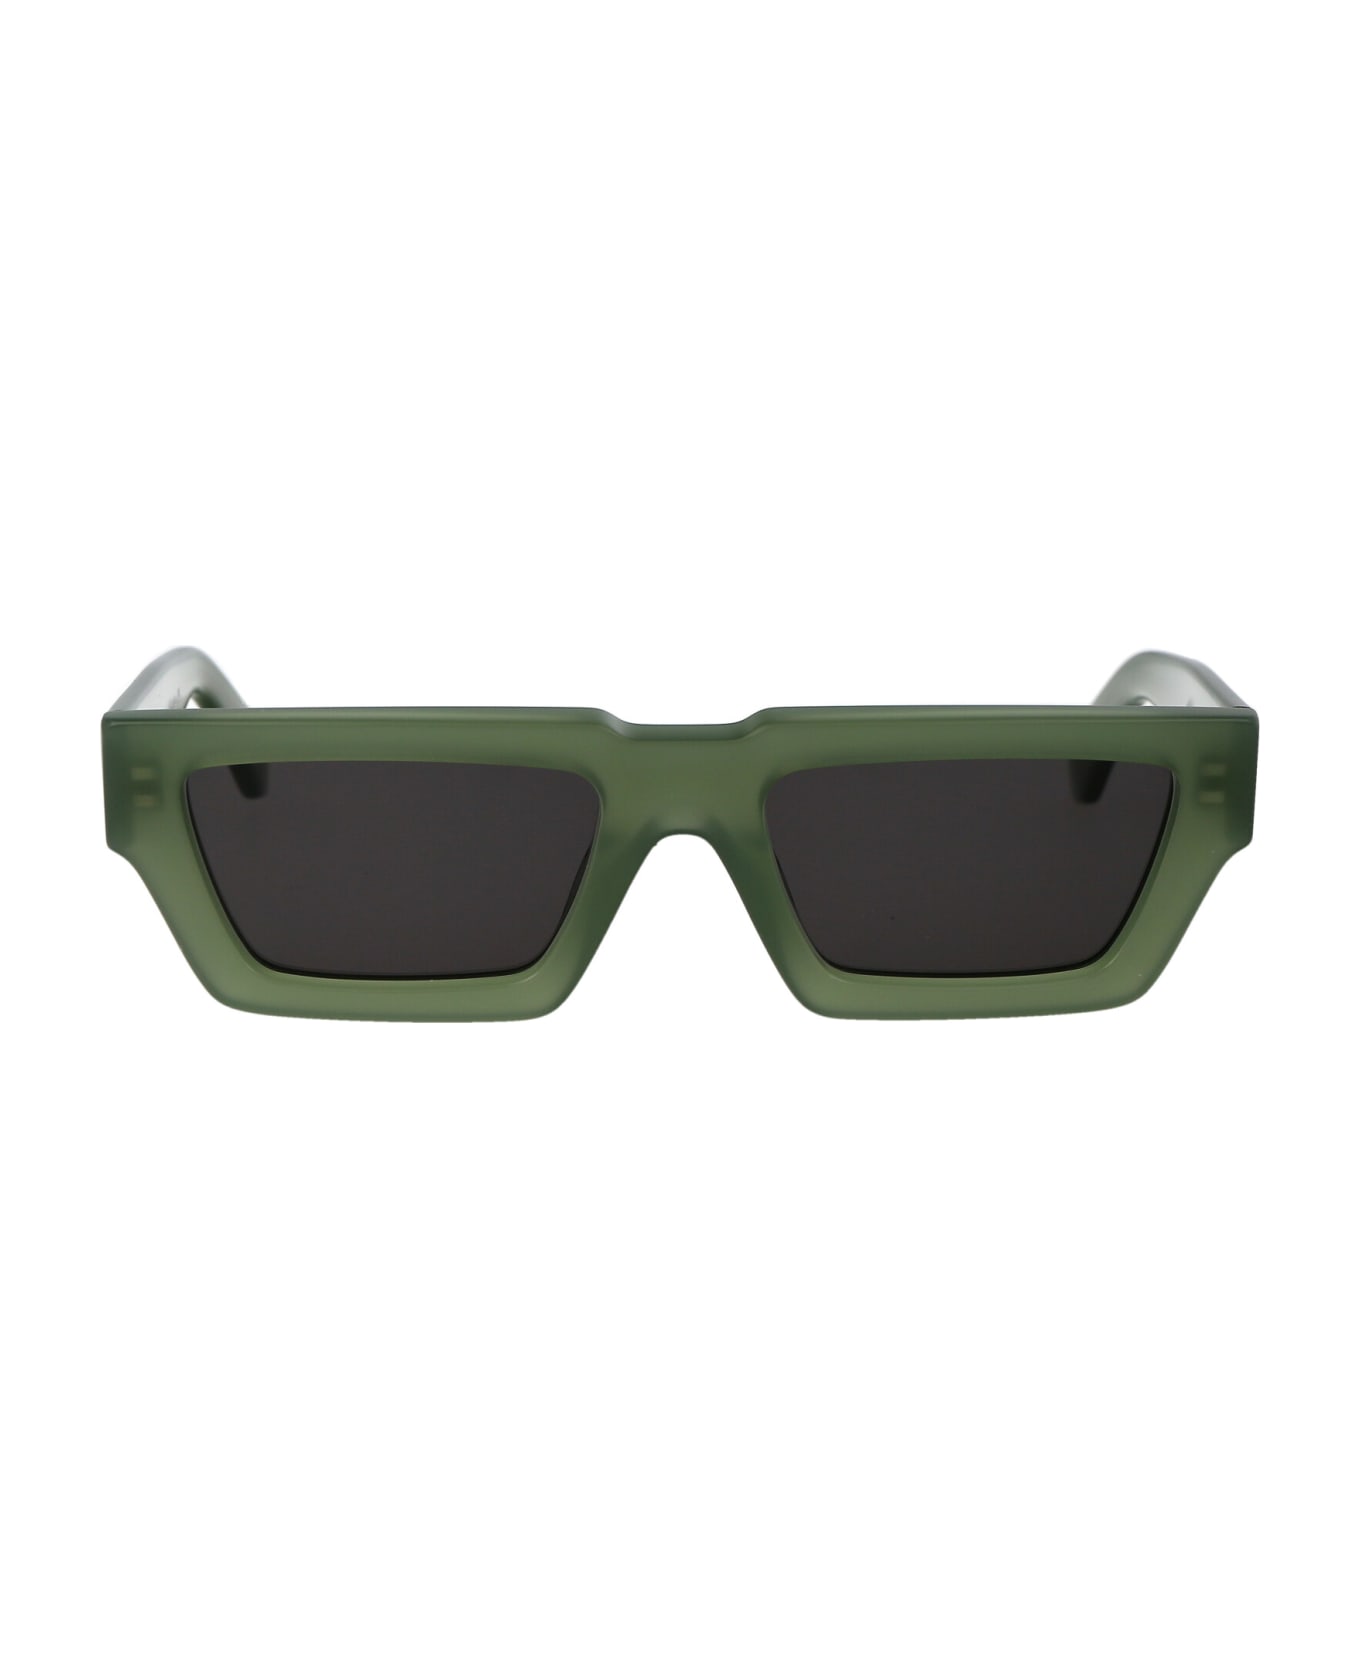 Off-White Manchester Sunglasses - green